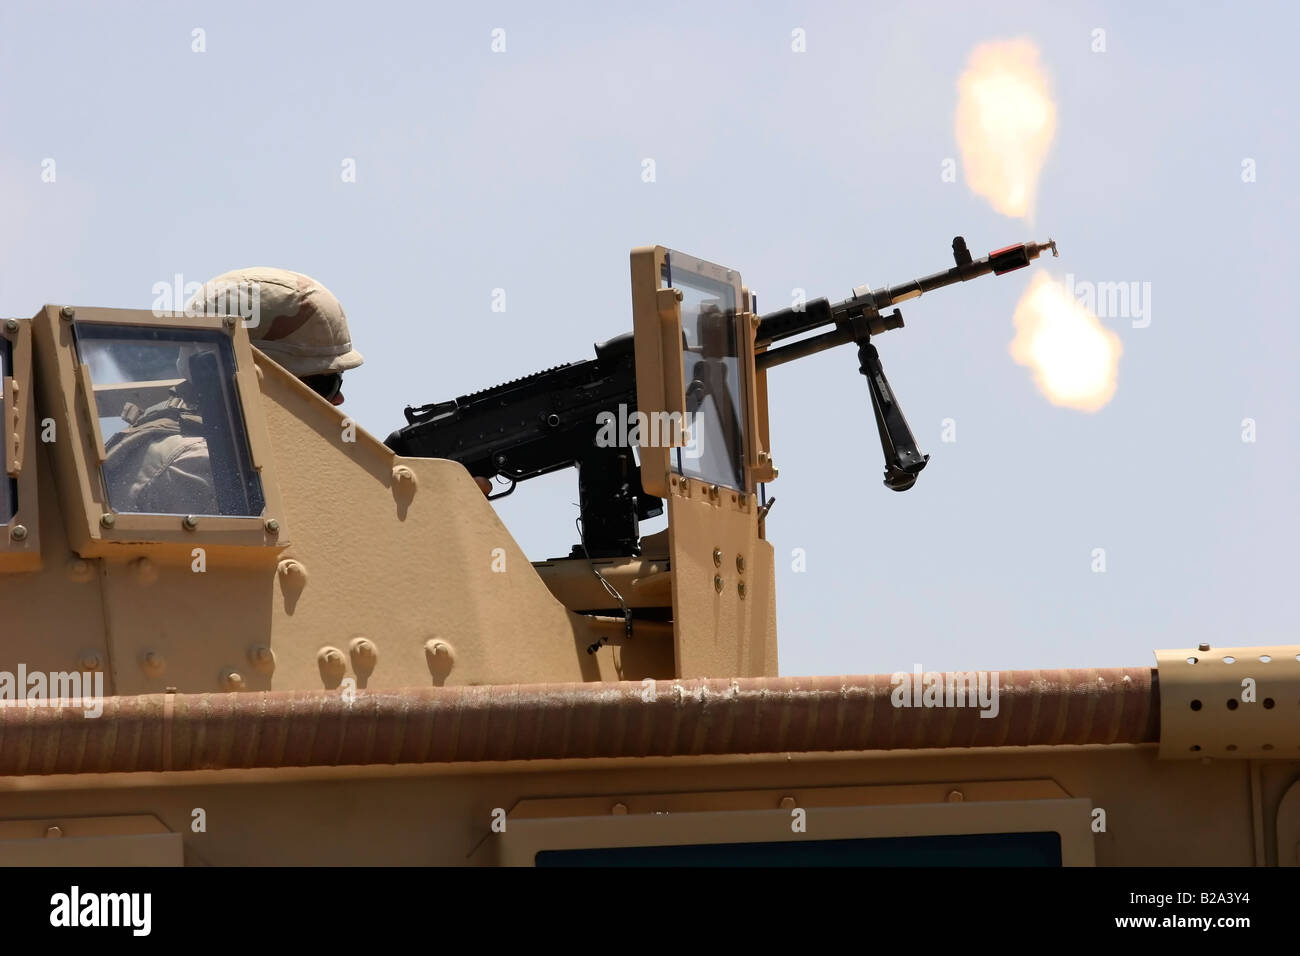 Military Humvee mounted machine gun firing blank rounds during demonstration Stock Photo